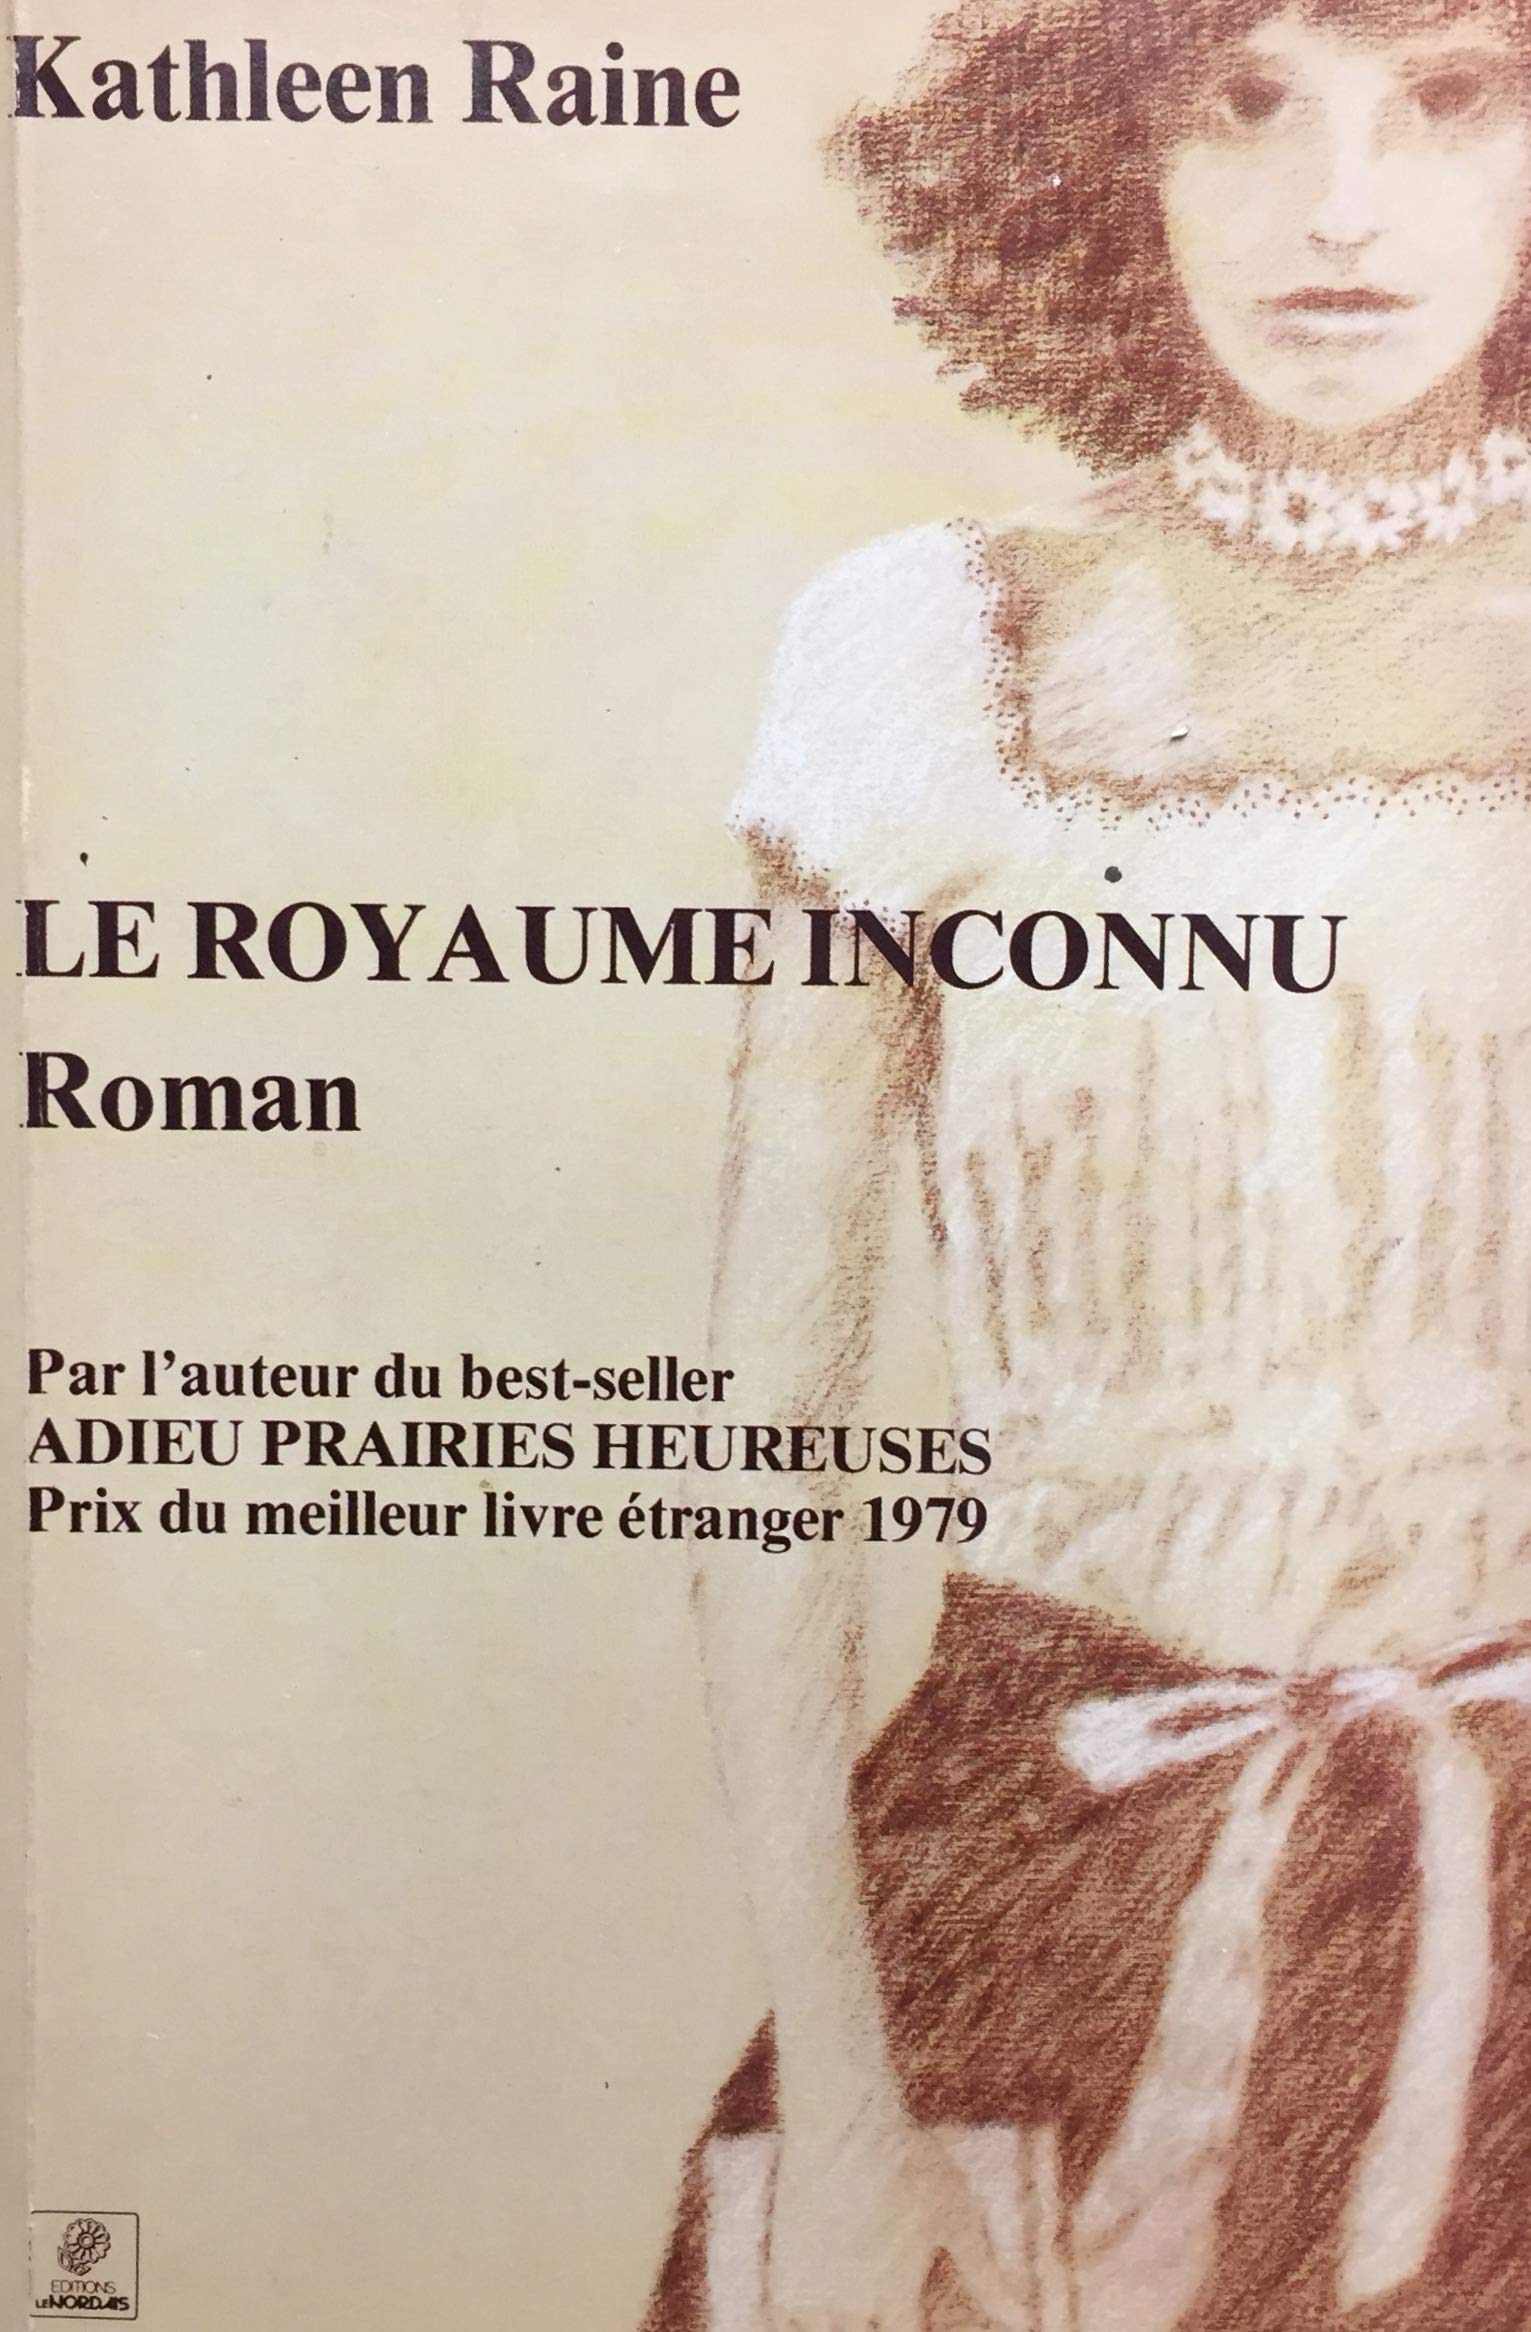 Livre ISBN 2892220173 Le royame inconnu (Kathleen Raine)